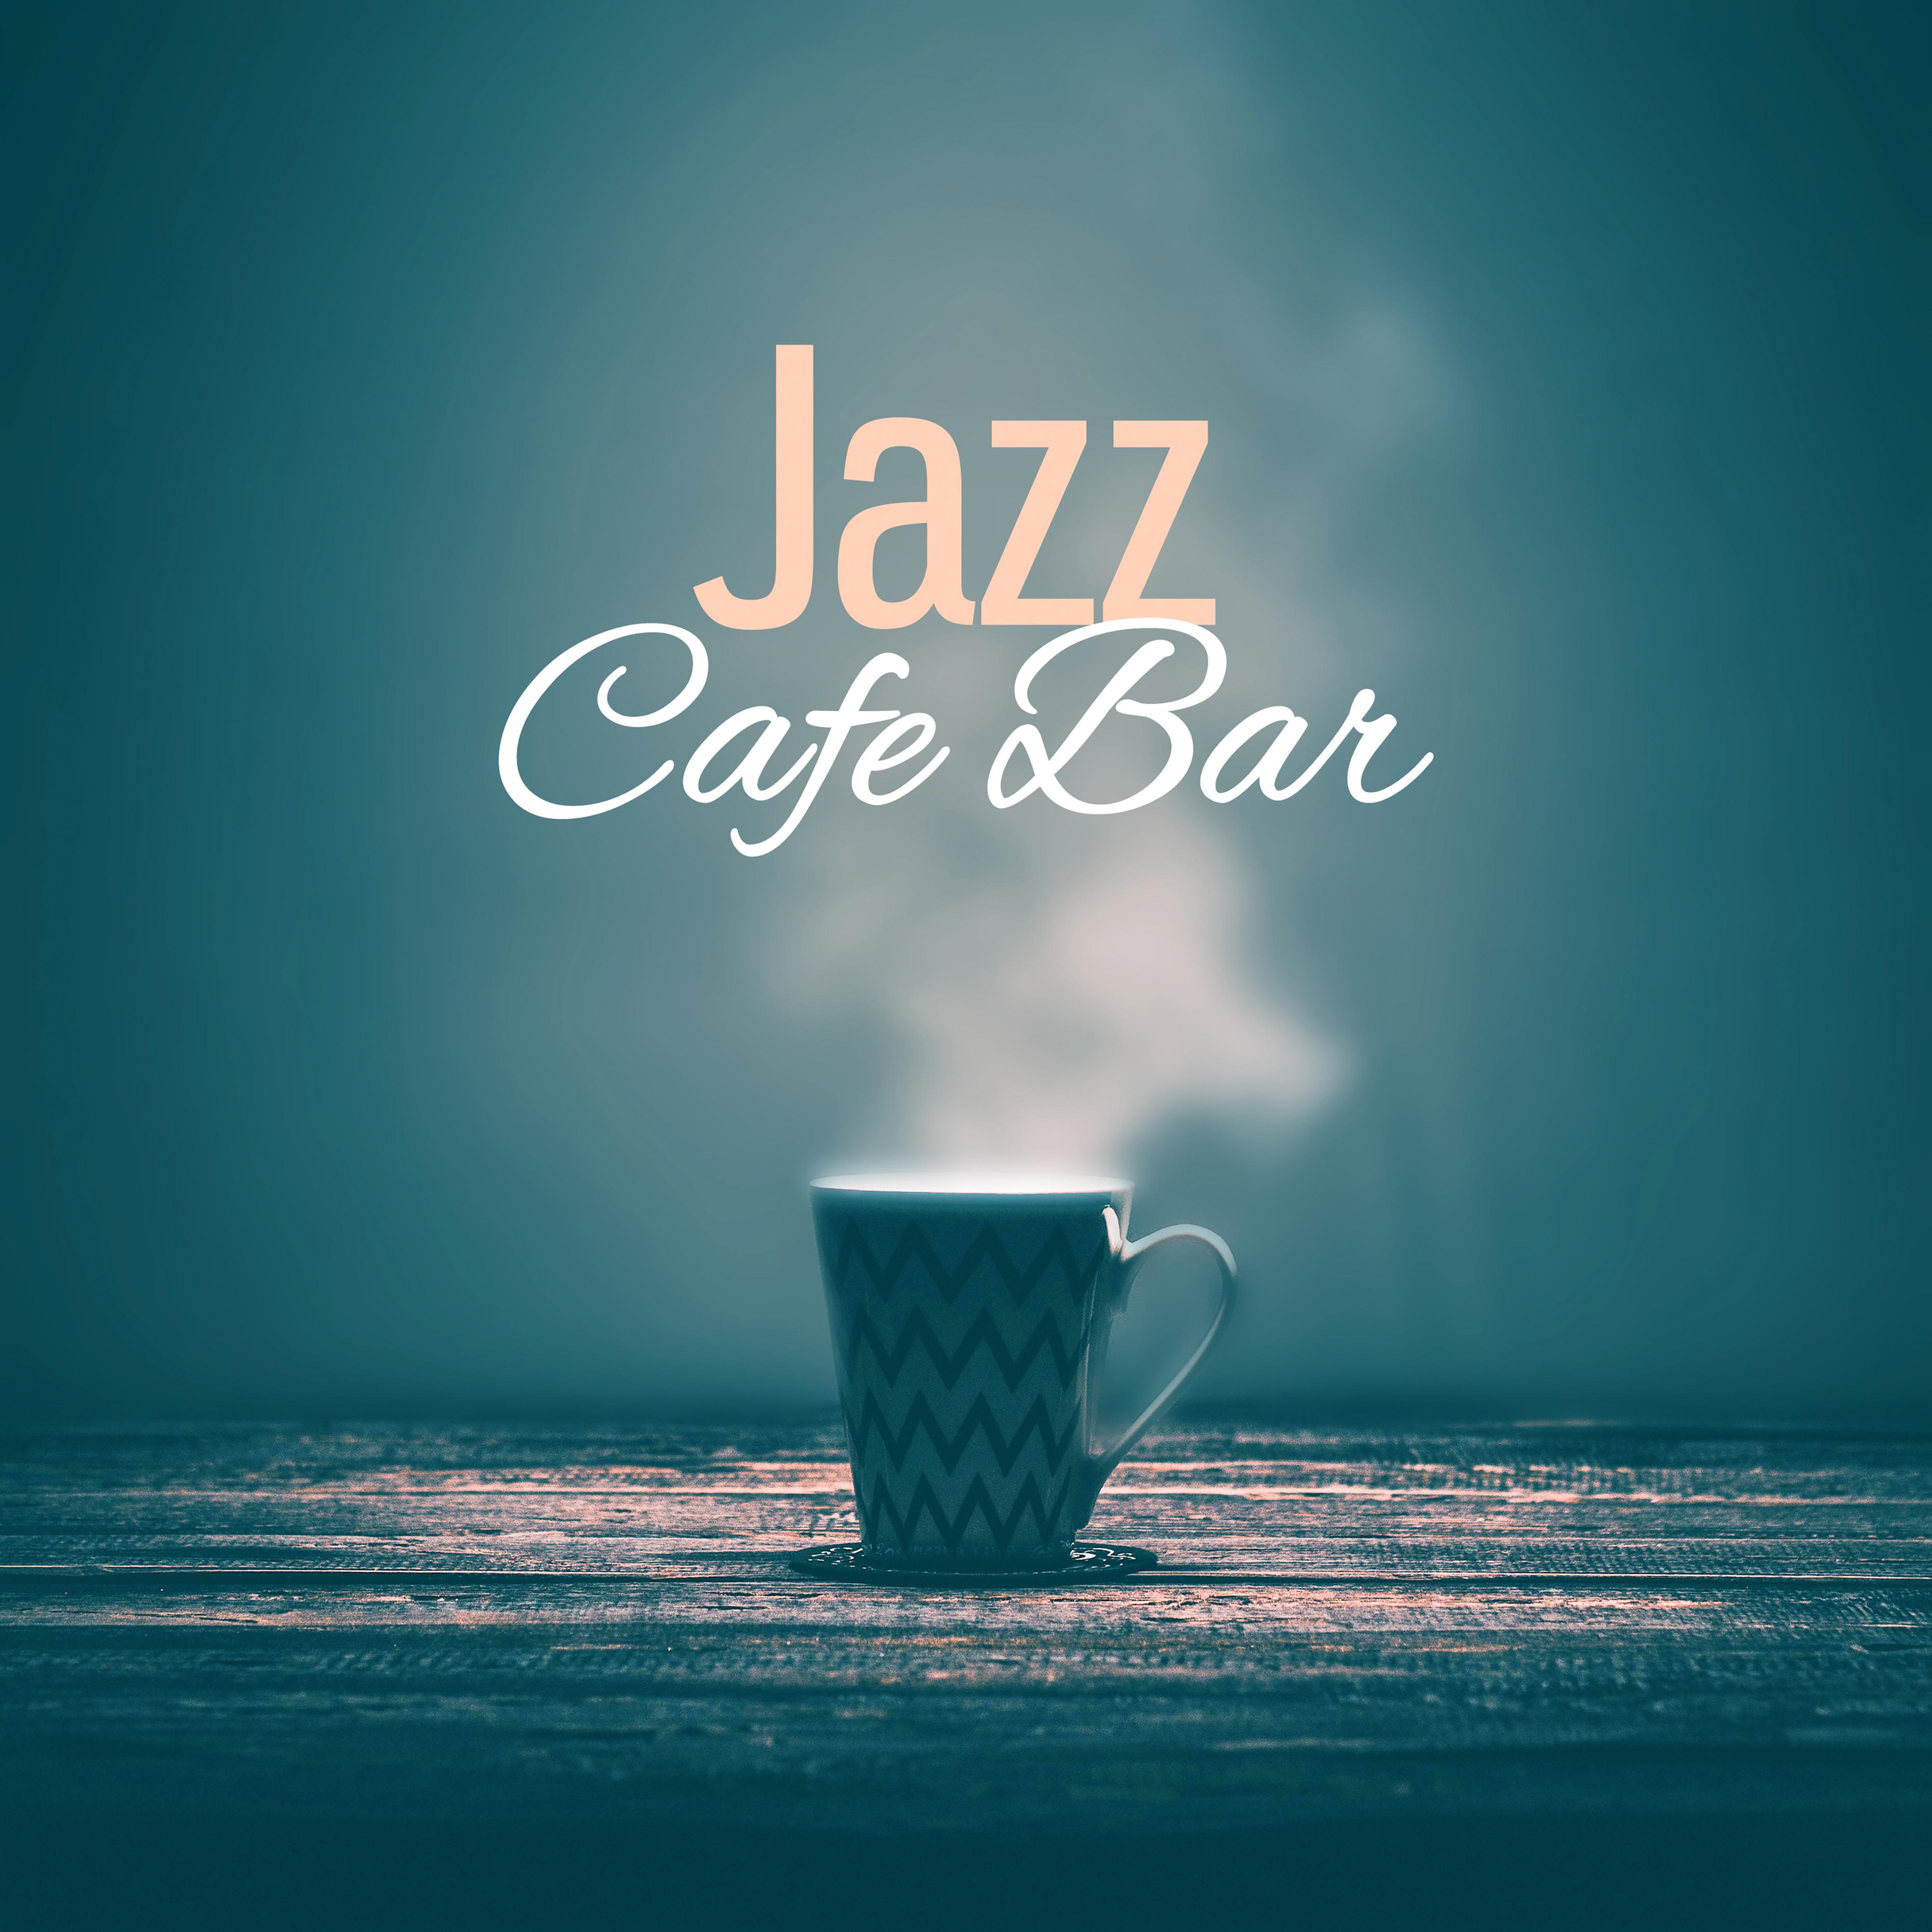 Jazz Cafe Bar  Jazz 2017, Relaxed Jazz, Smooth Piano, New Instrumental Music